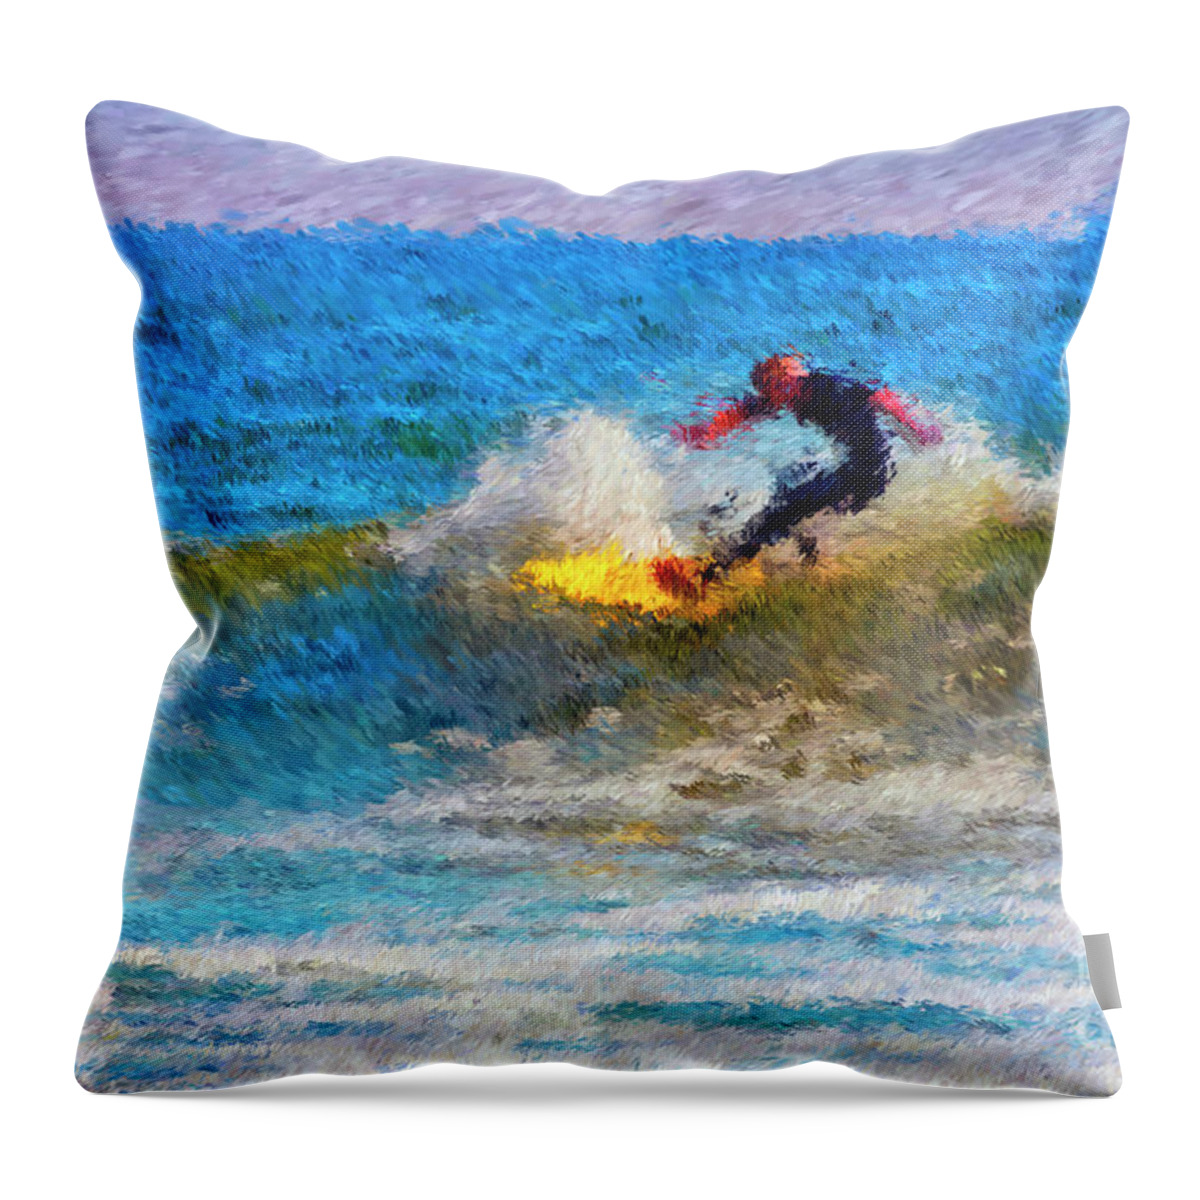 Surf Throw Pillow featuring the digital art Shreddin' by Scott Evers